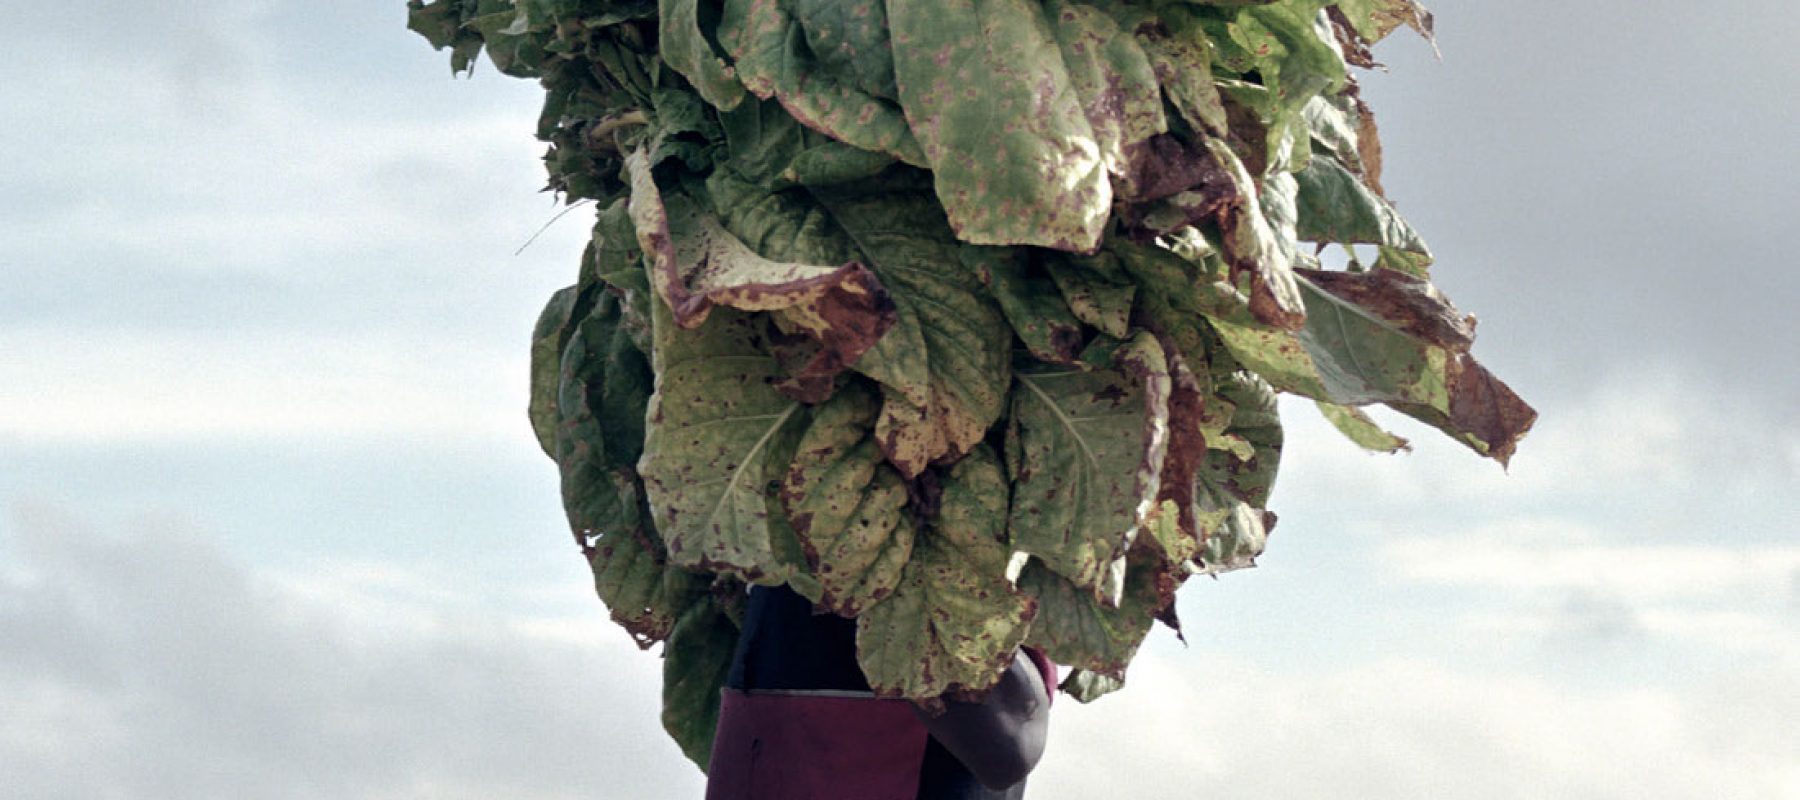 a man balances a large bushel of vegetation on his head, obscuring it